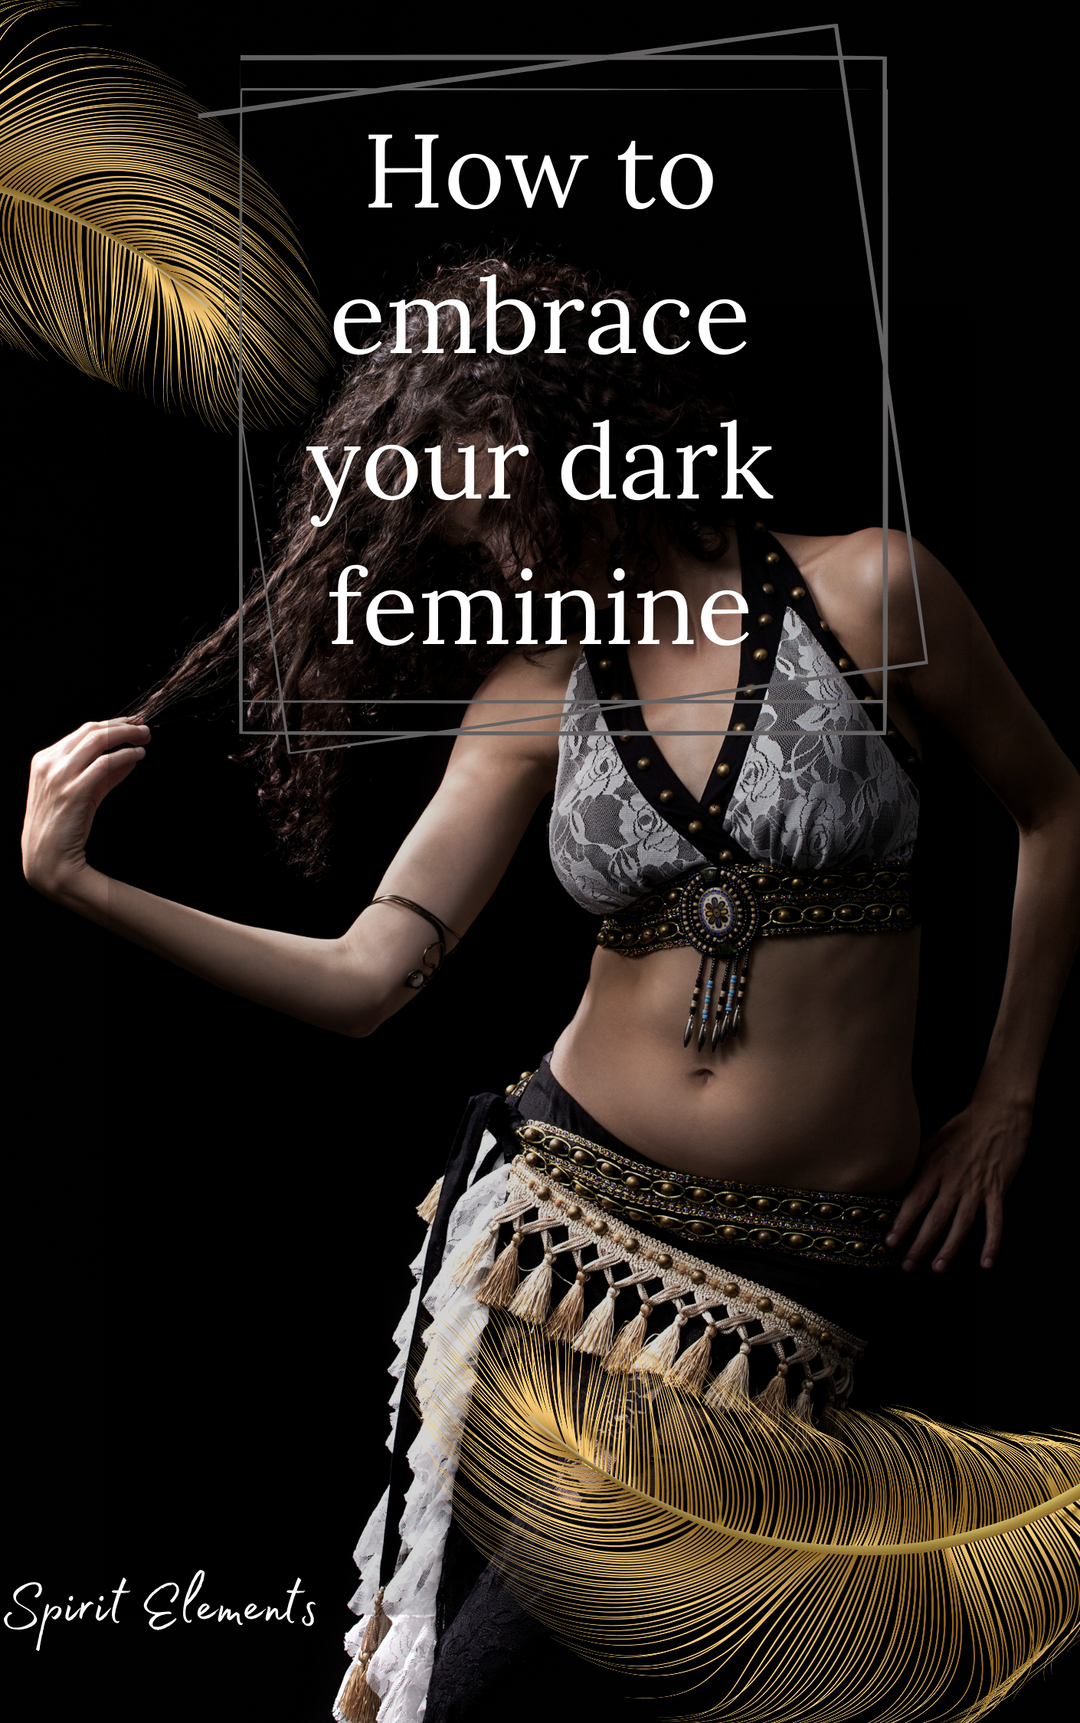 Dark feminine